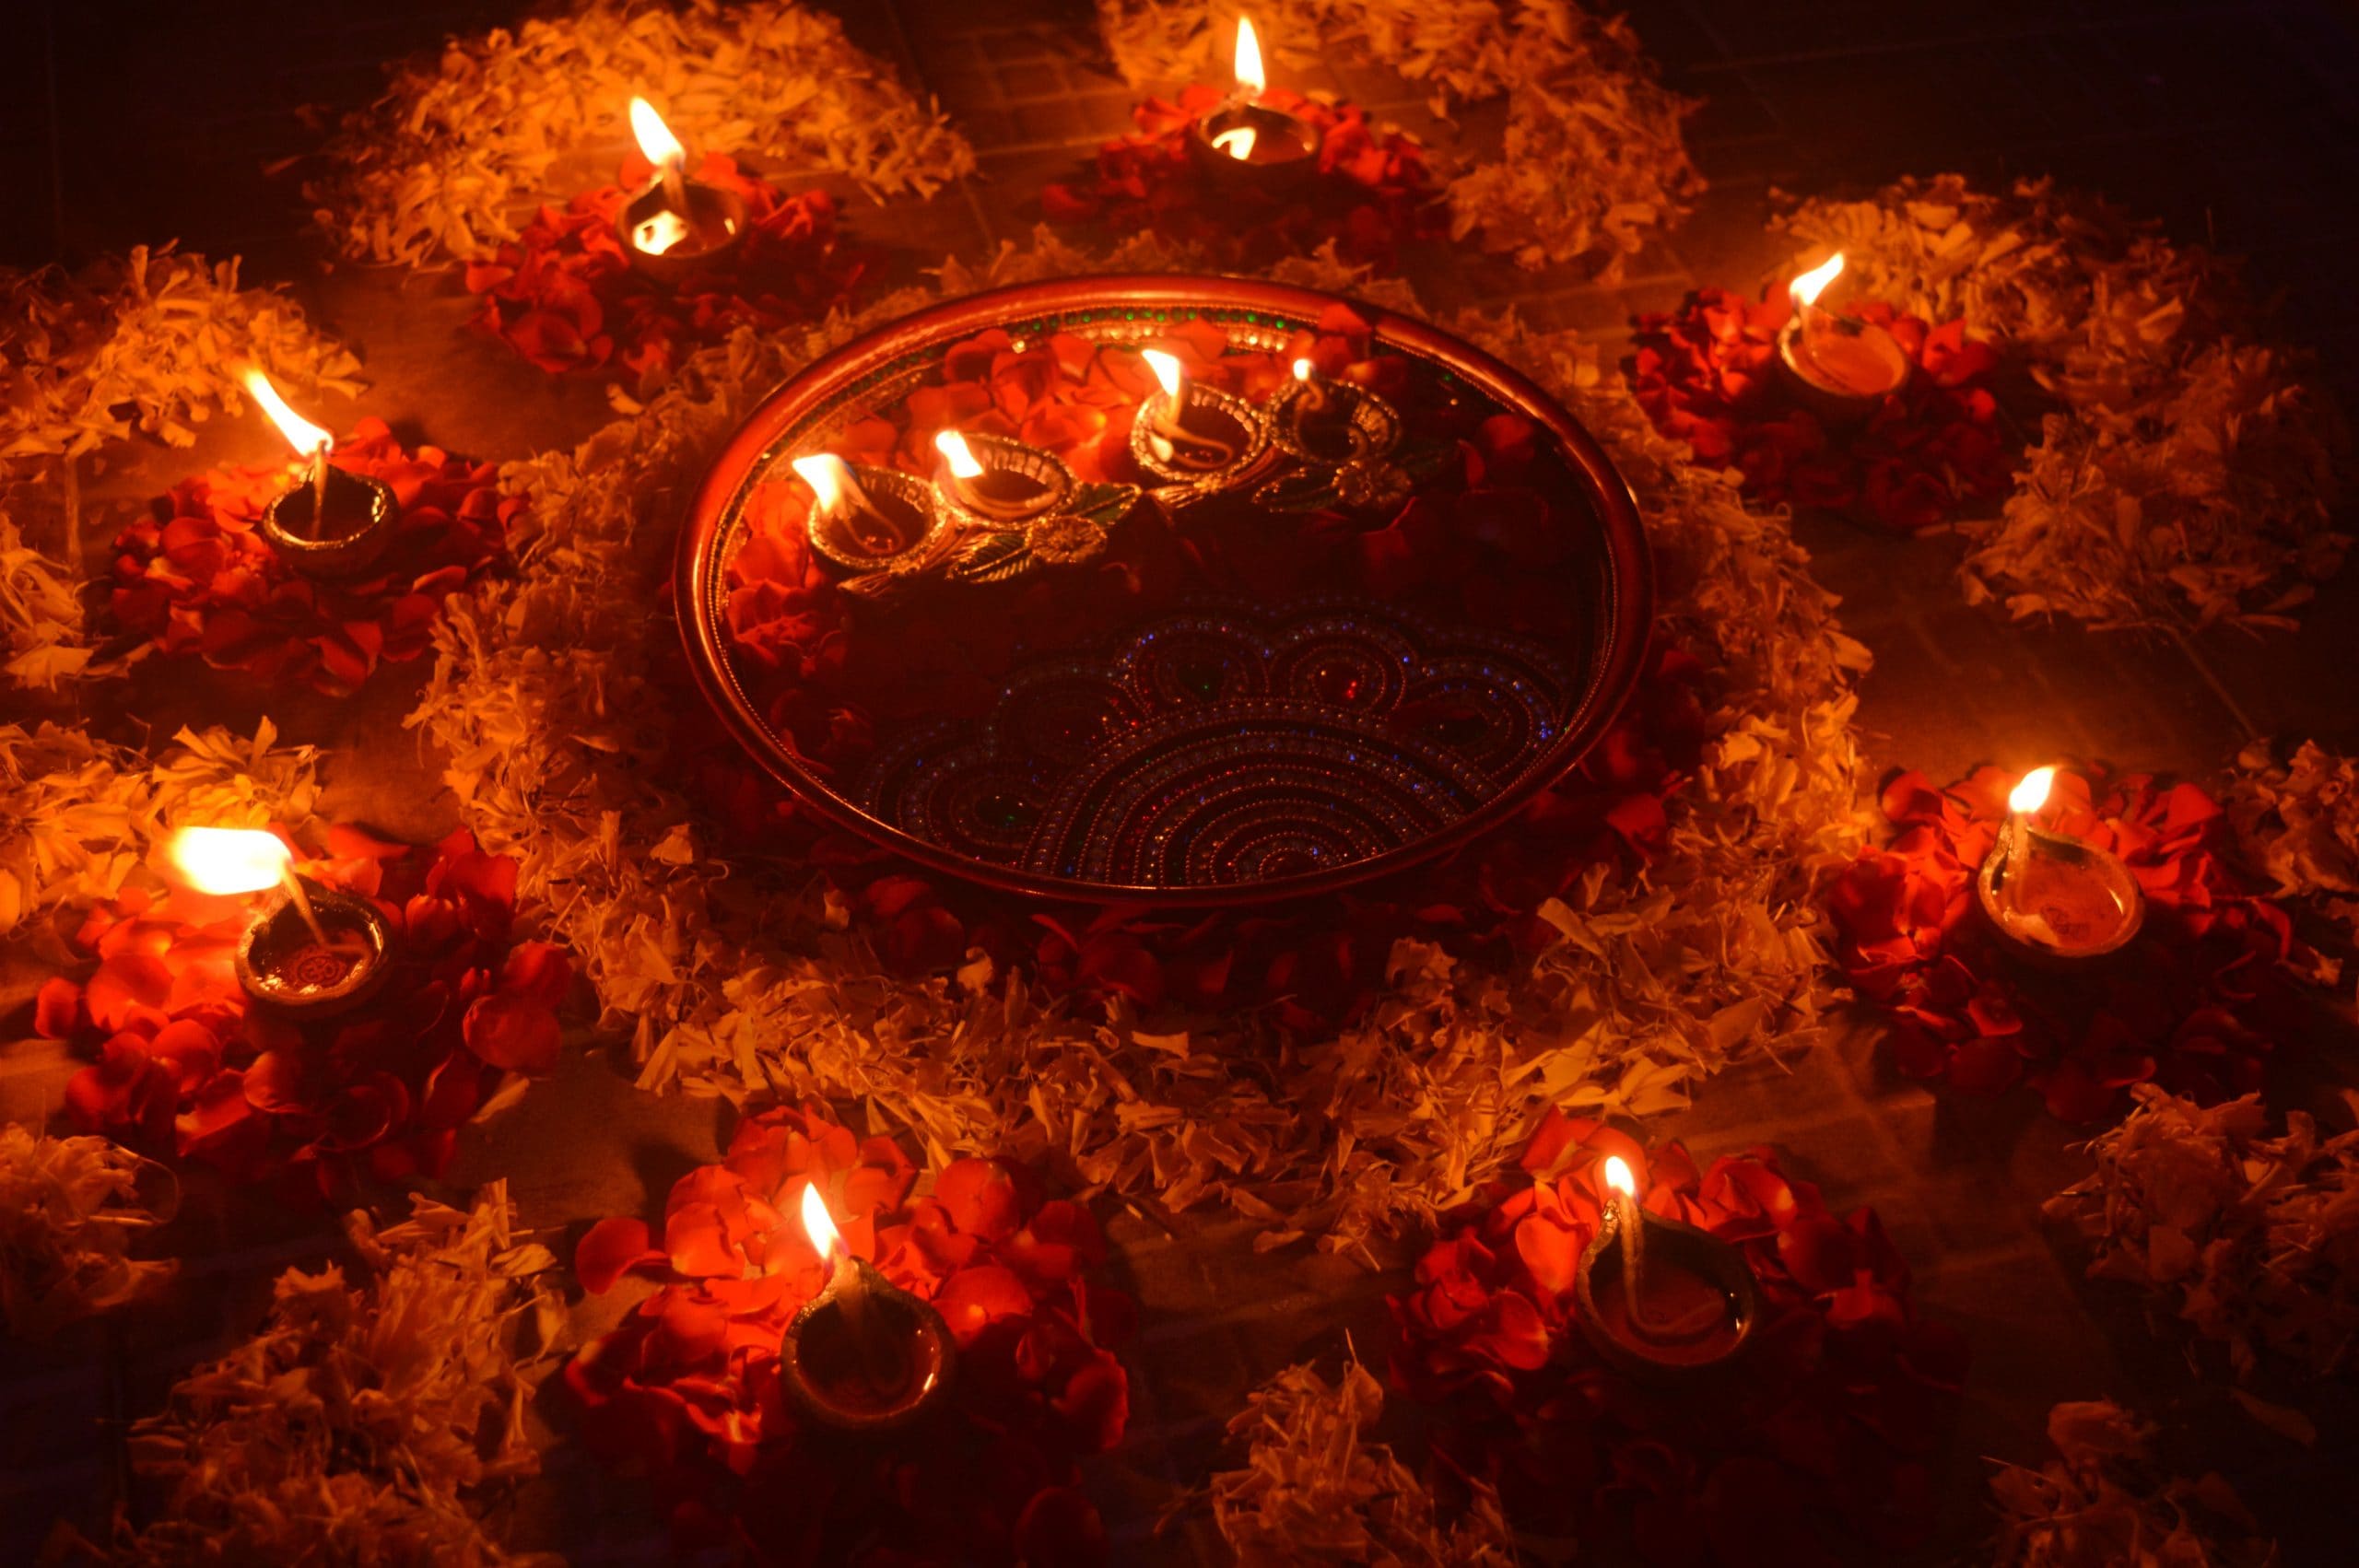 How long does the Diwali festival last?